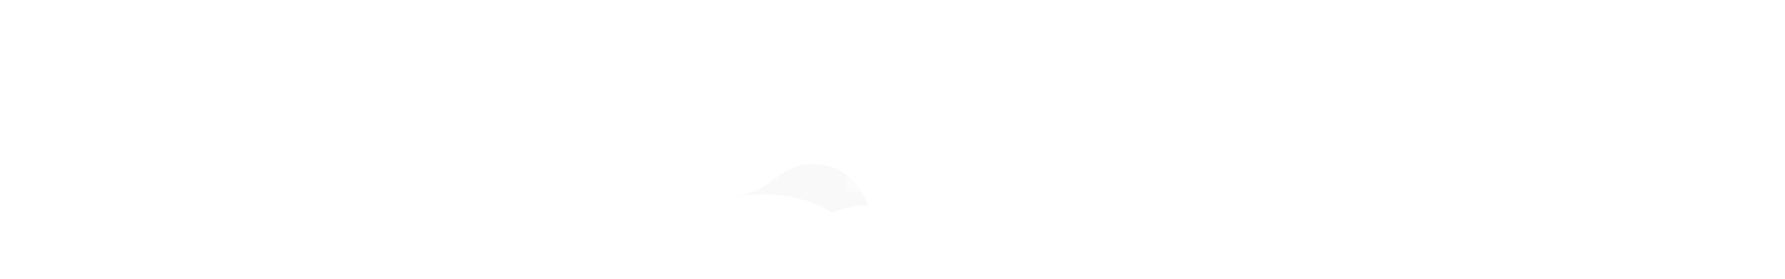 Clayton BR Wolfe logo transparent